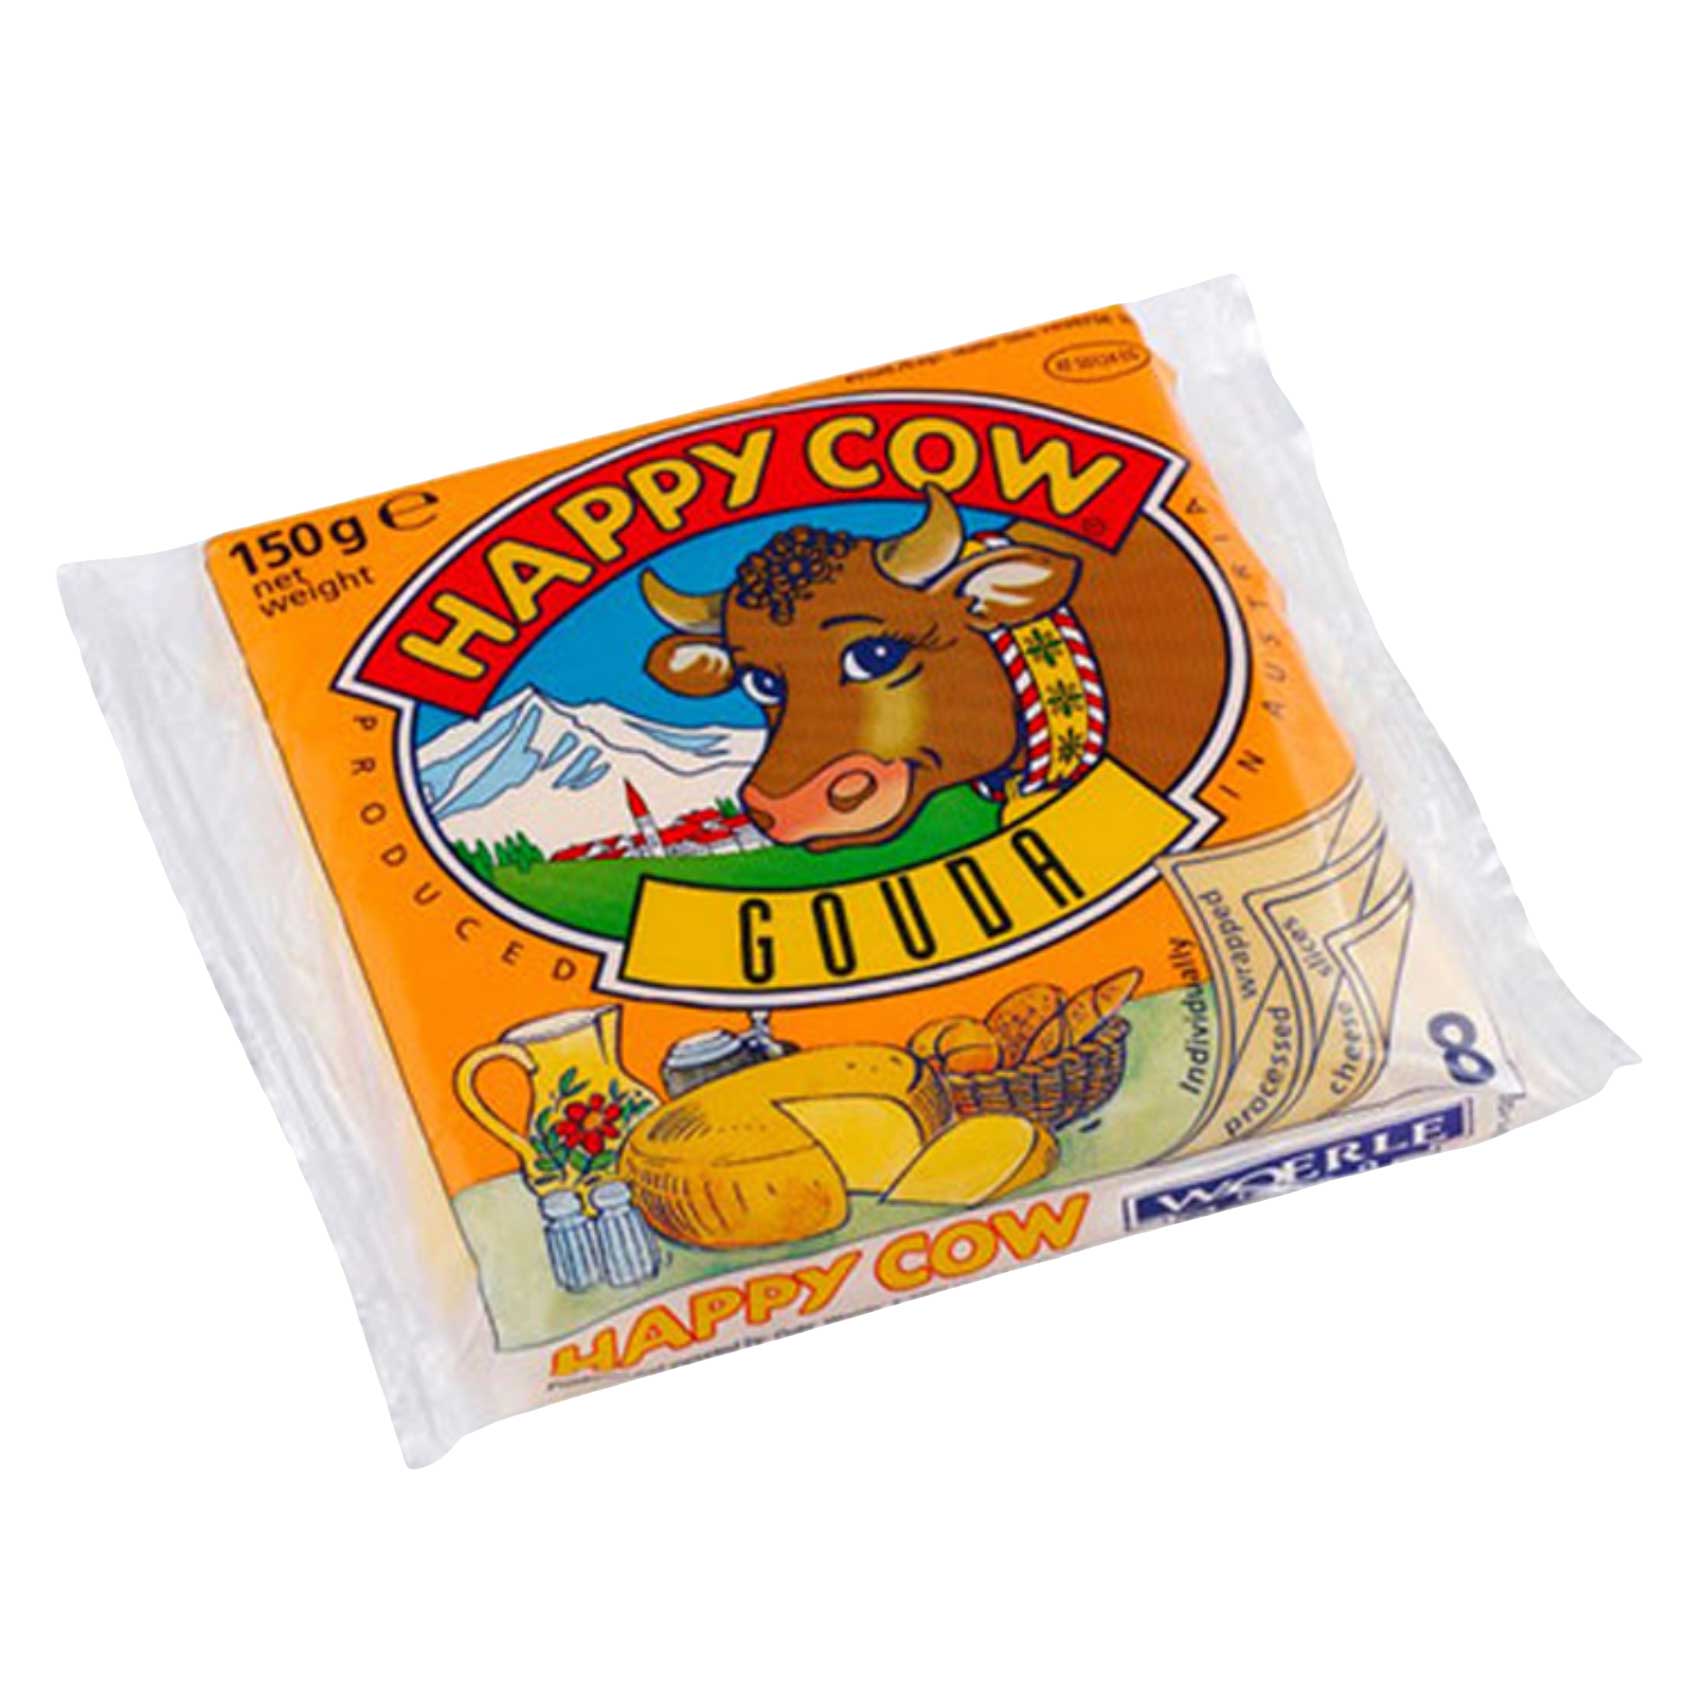 Happy Cow 8 Slices Gouda 150G